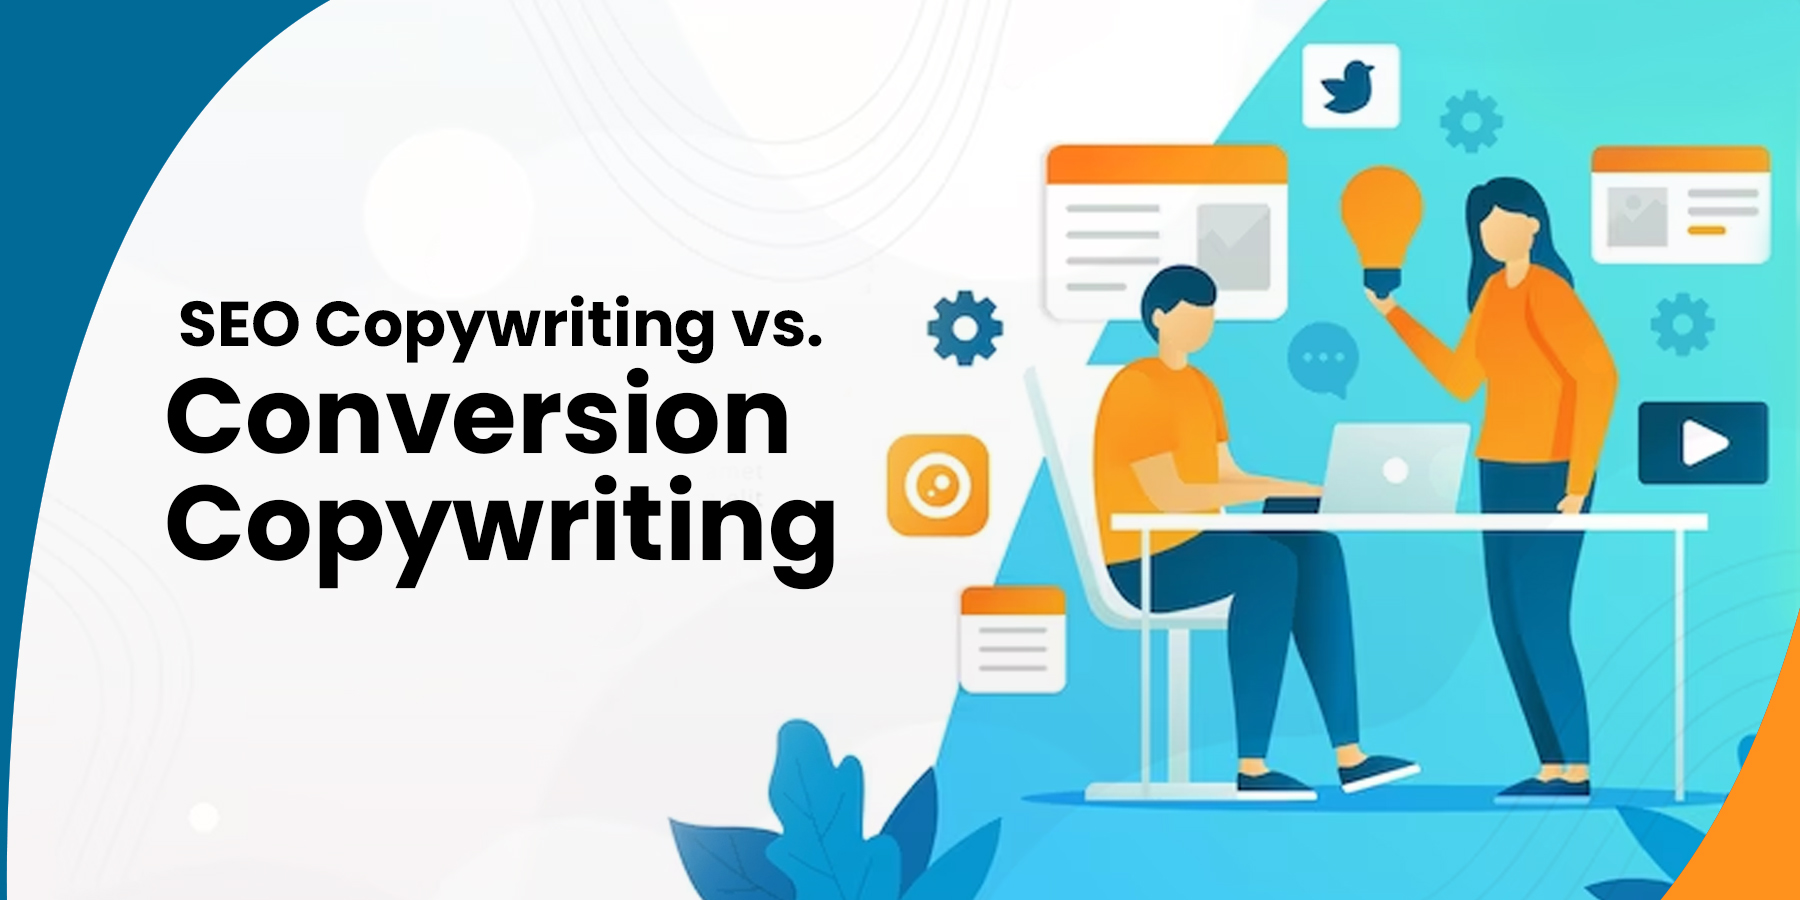 SEO Copywriting vs. Conversion Copywriting